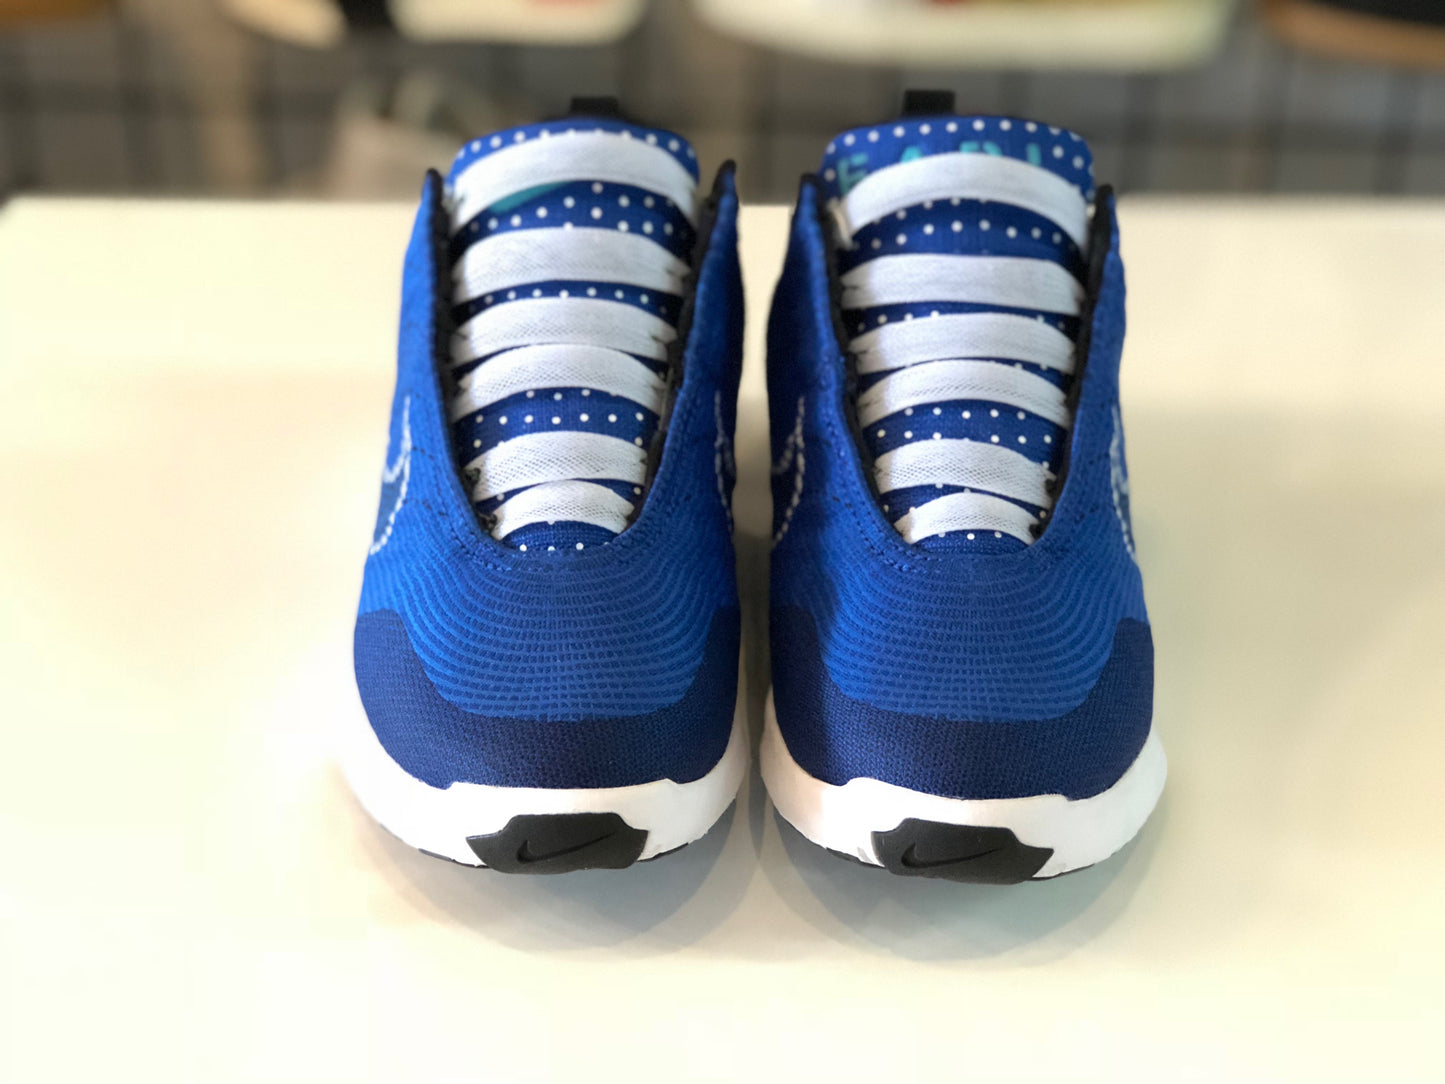 Nike Hyper Adapt 1.0 Blue size 5.5